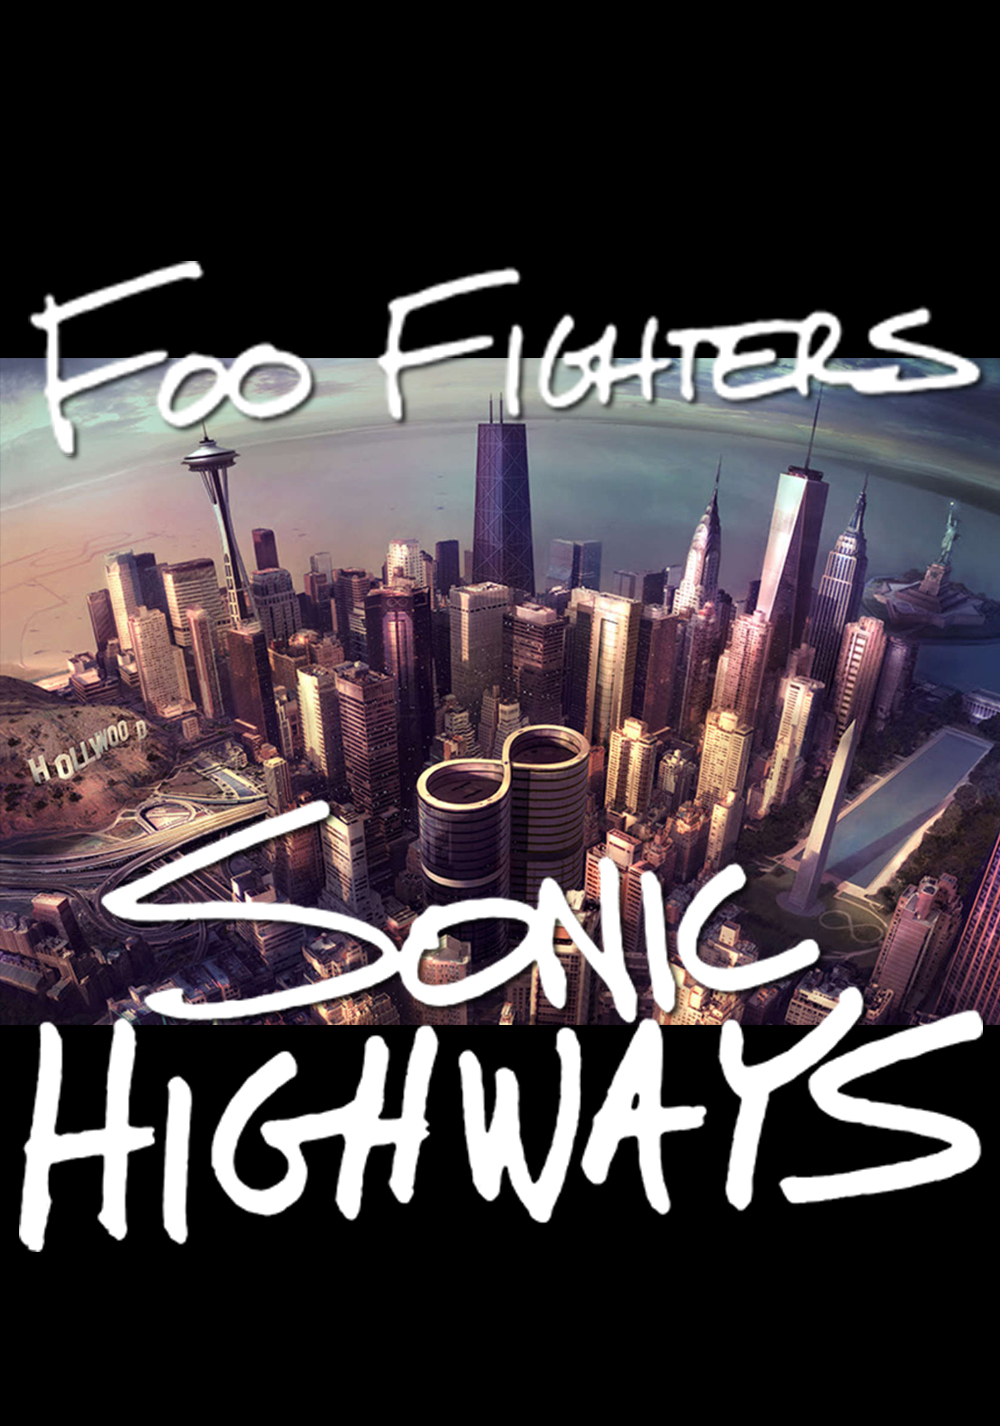 Images Of Foo Fighters - Foo Sonic Highways - HD Wallpaper 